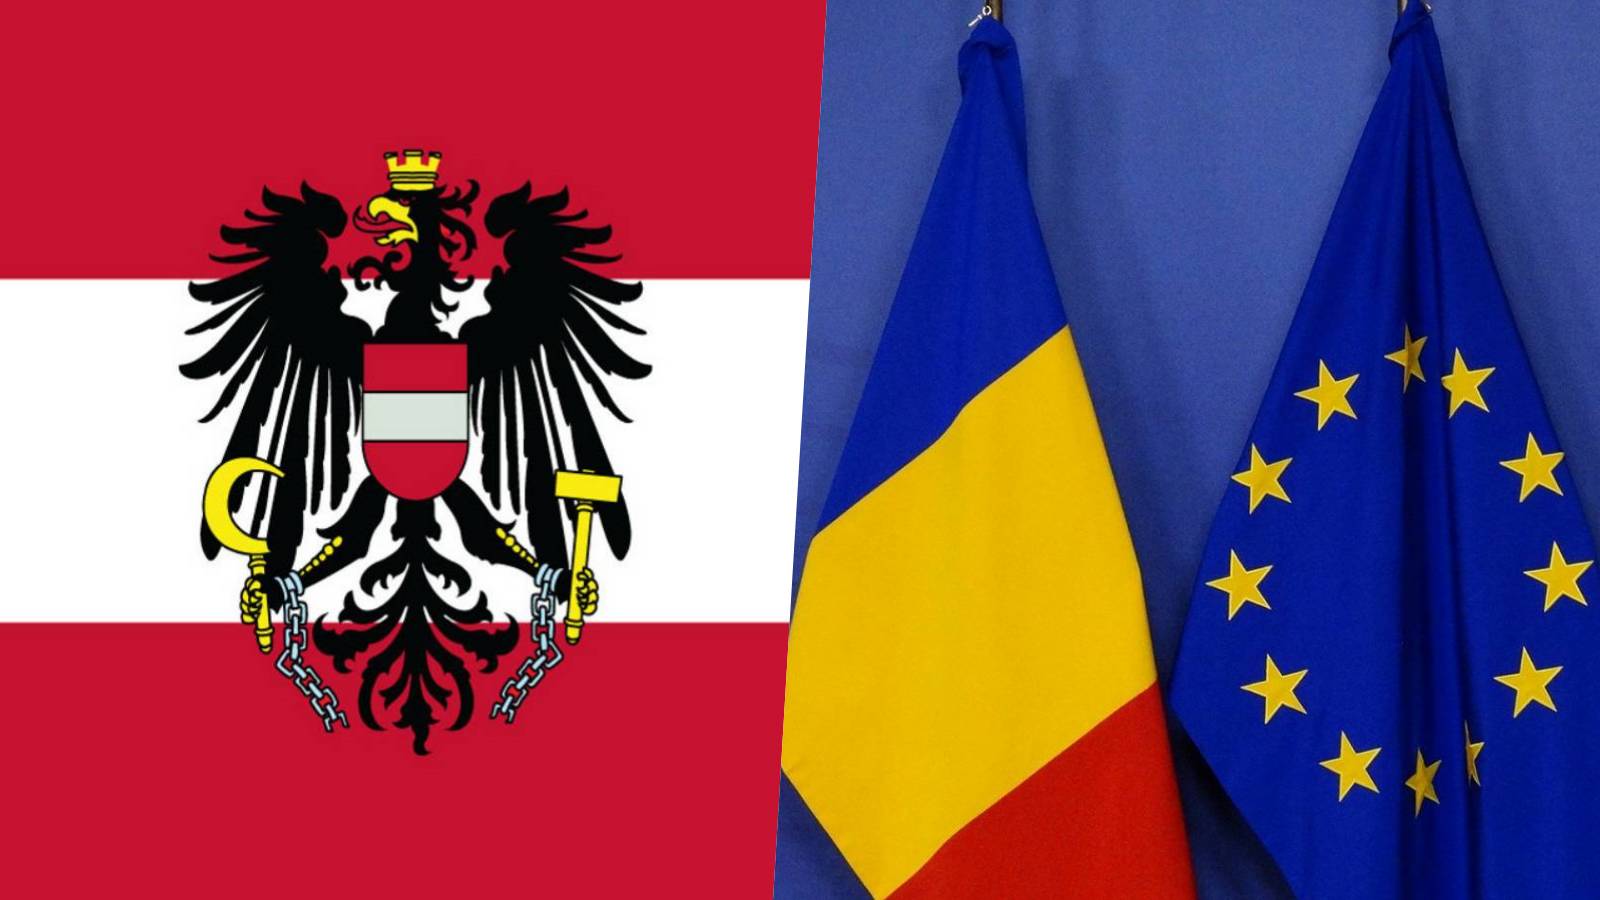 Austria Receives Major Blow EC Ban on Romania's Schengen Accession